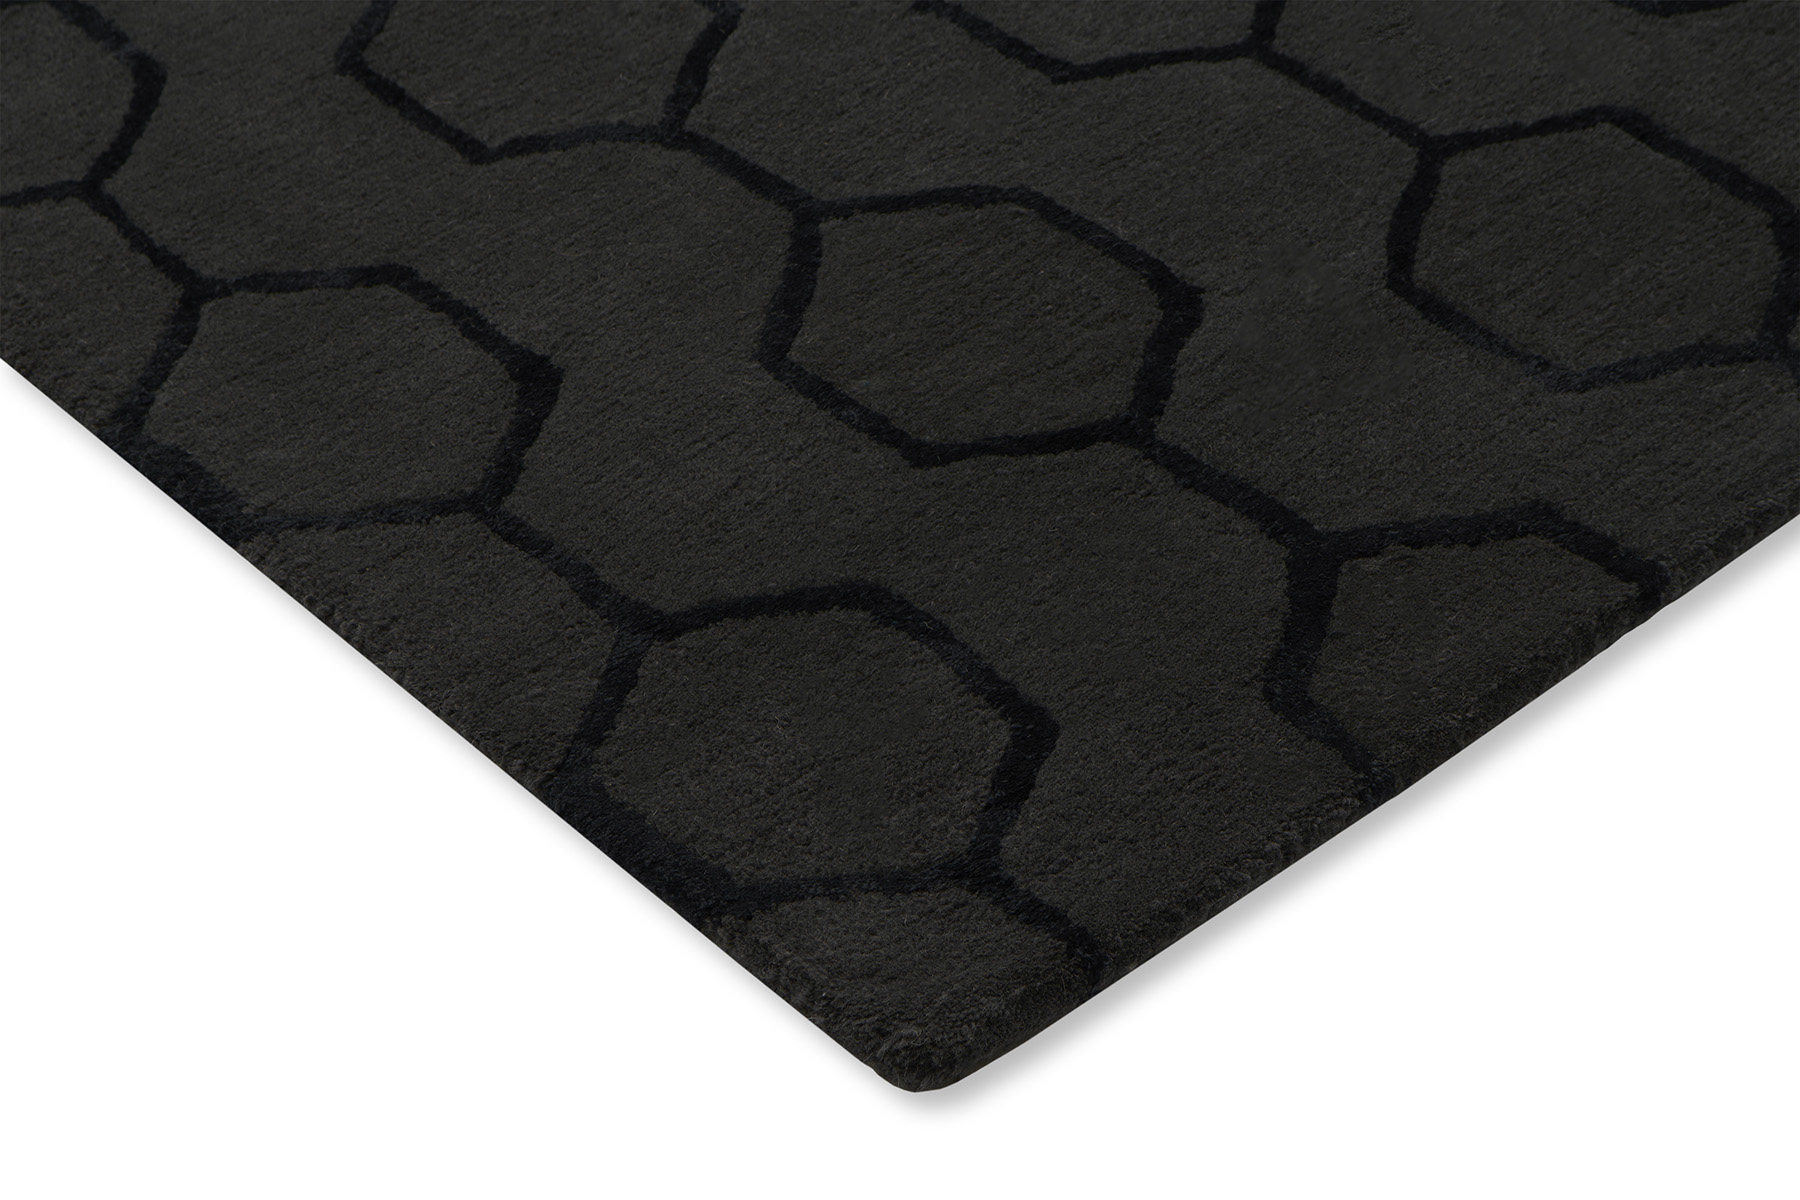 Geometric Noir Rug ☞ Size: 4' x 6' (120 x 180 cm)